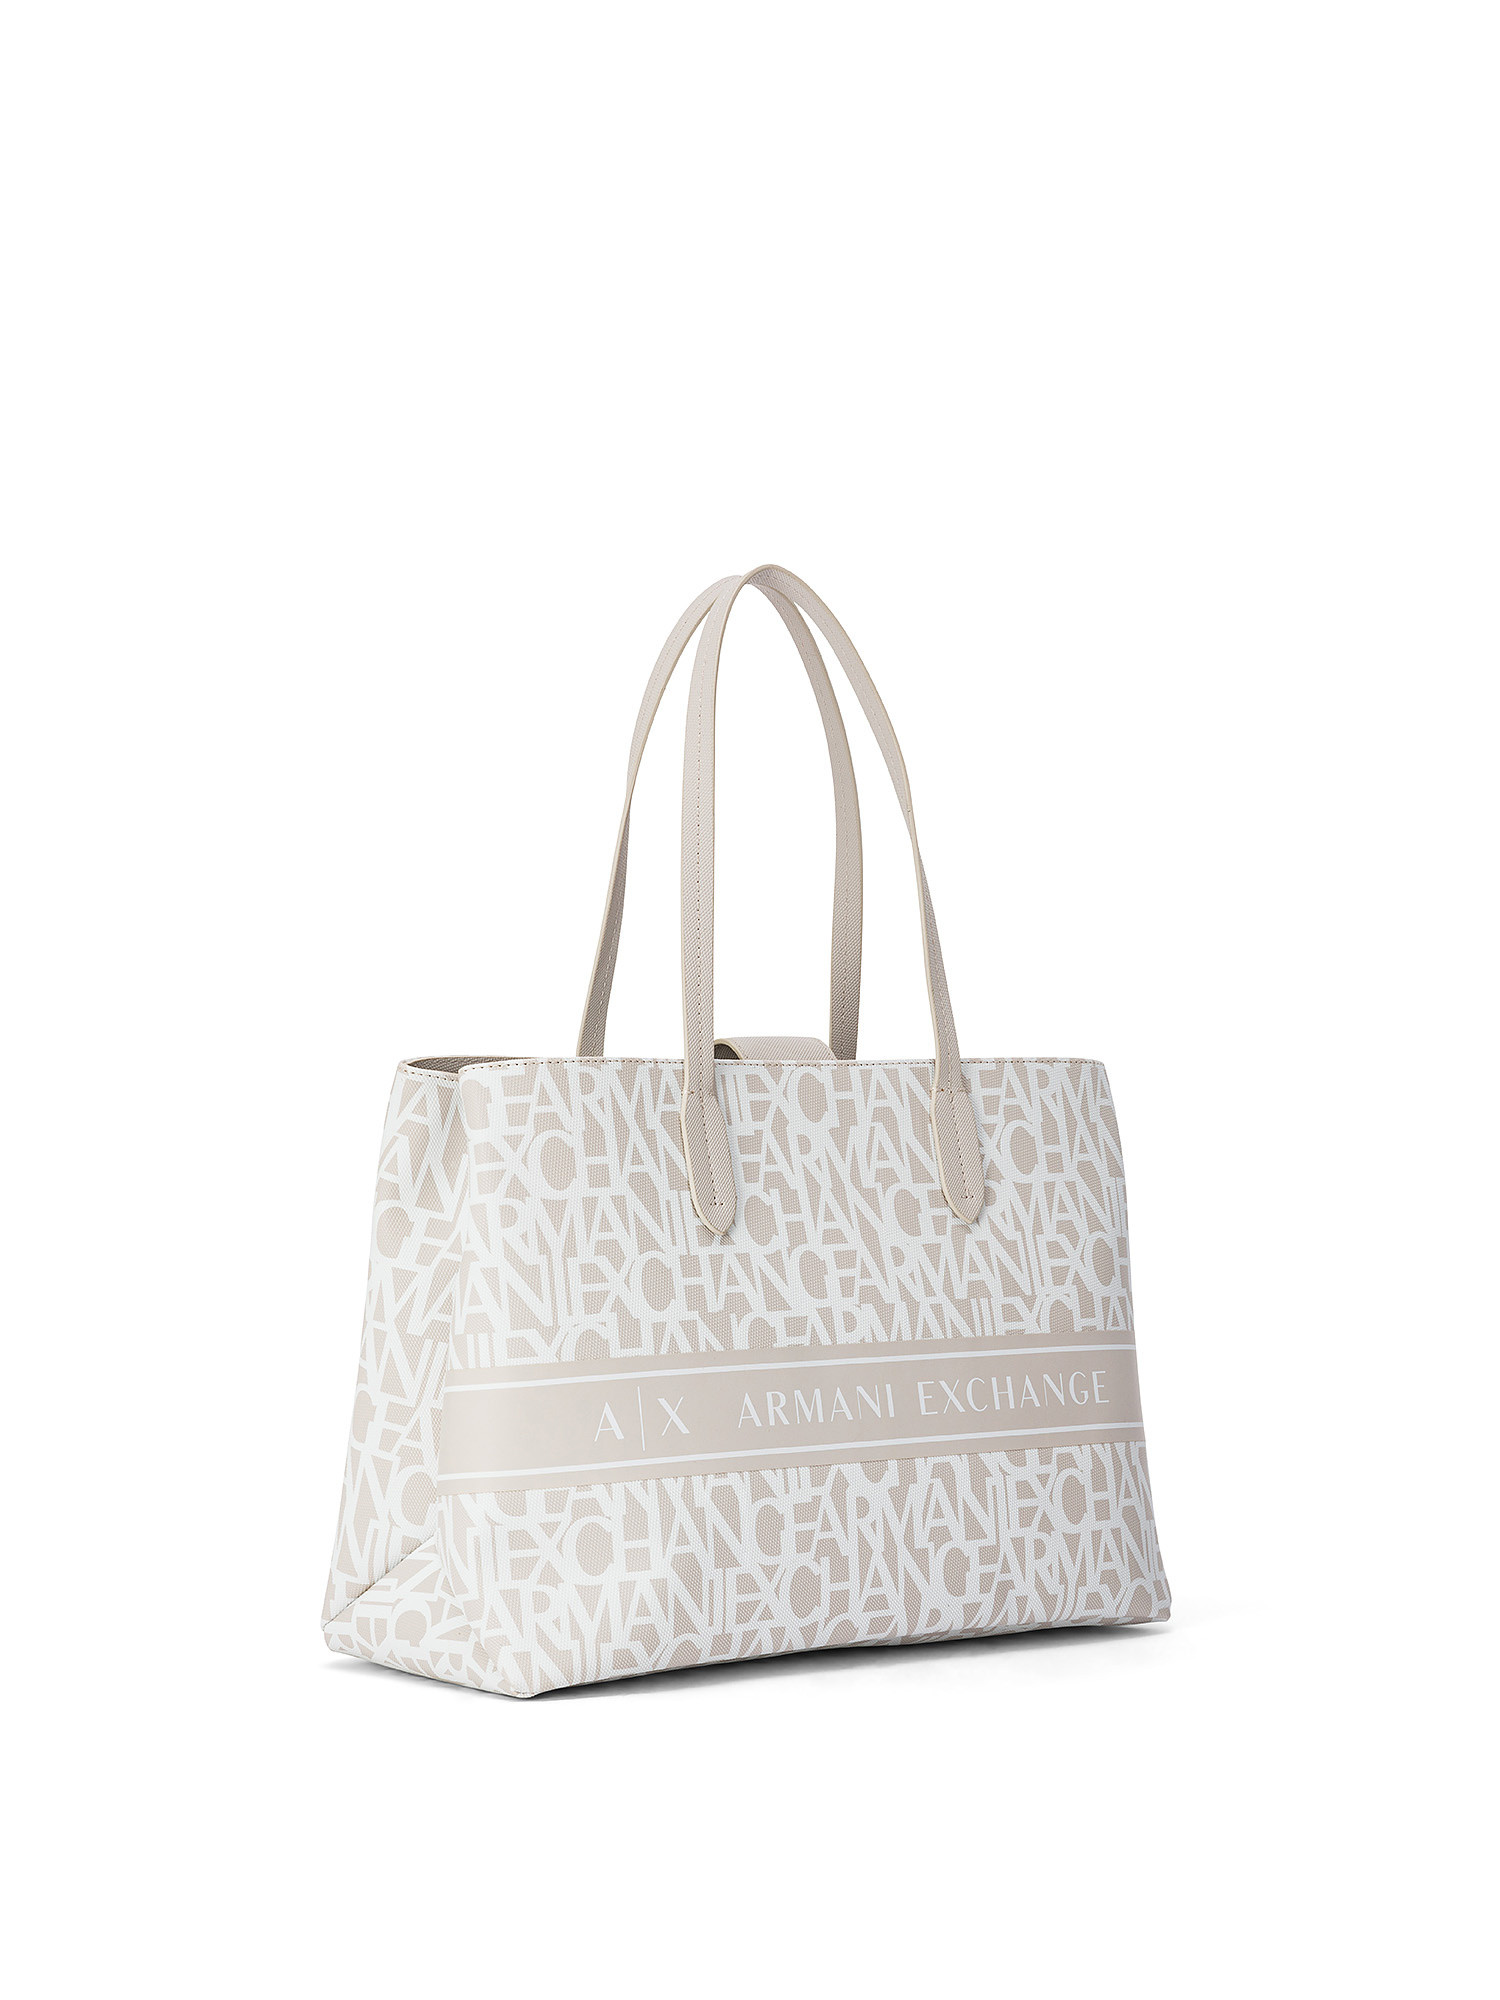 Armani Exchange - Tote bag with logo, Ice White, large image number 1